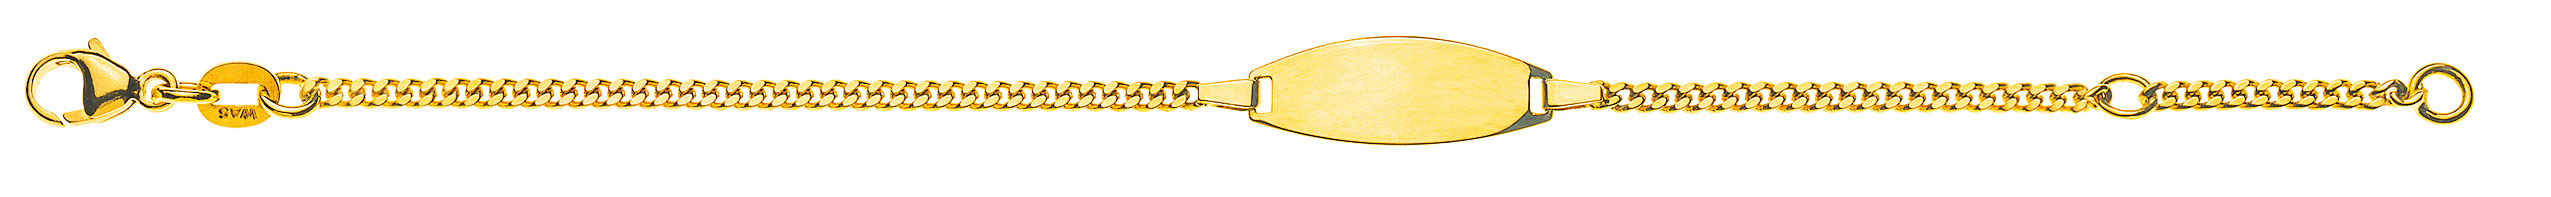 AURONOS Prestige ID-Bracelet en or jaune 18k blindé 14cm